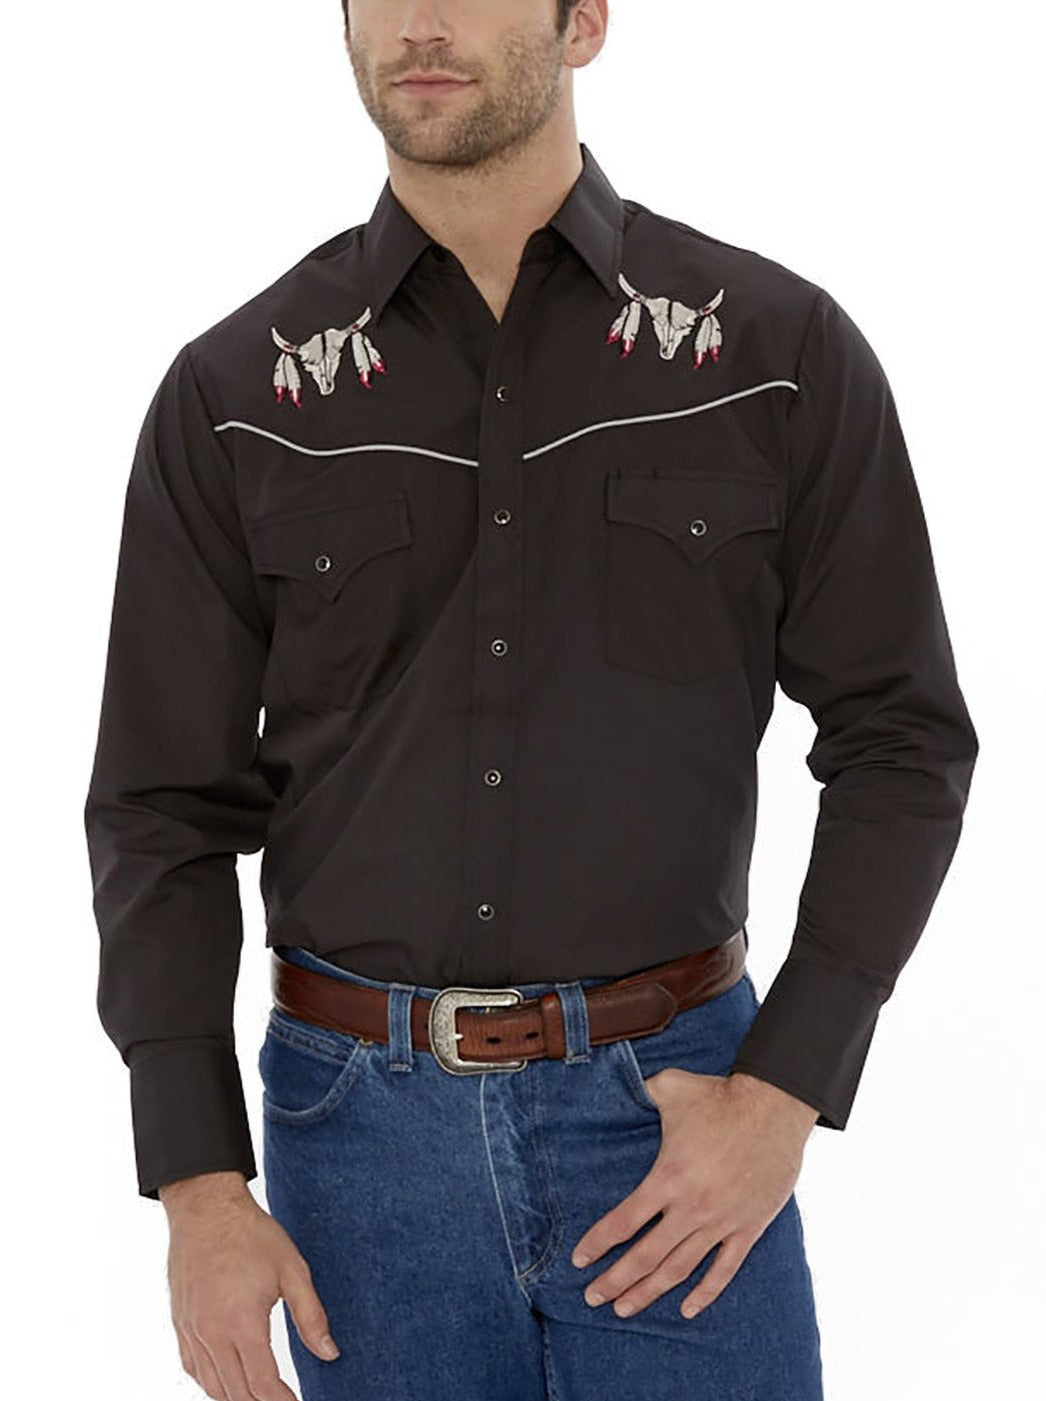 Men's Western Shirts | Men's Cowboy Shirts | Ely Cattleman